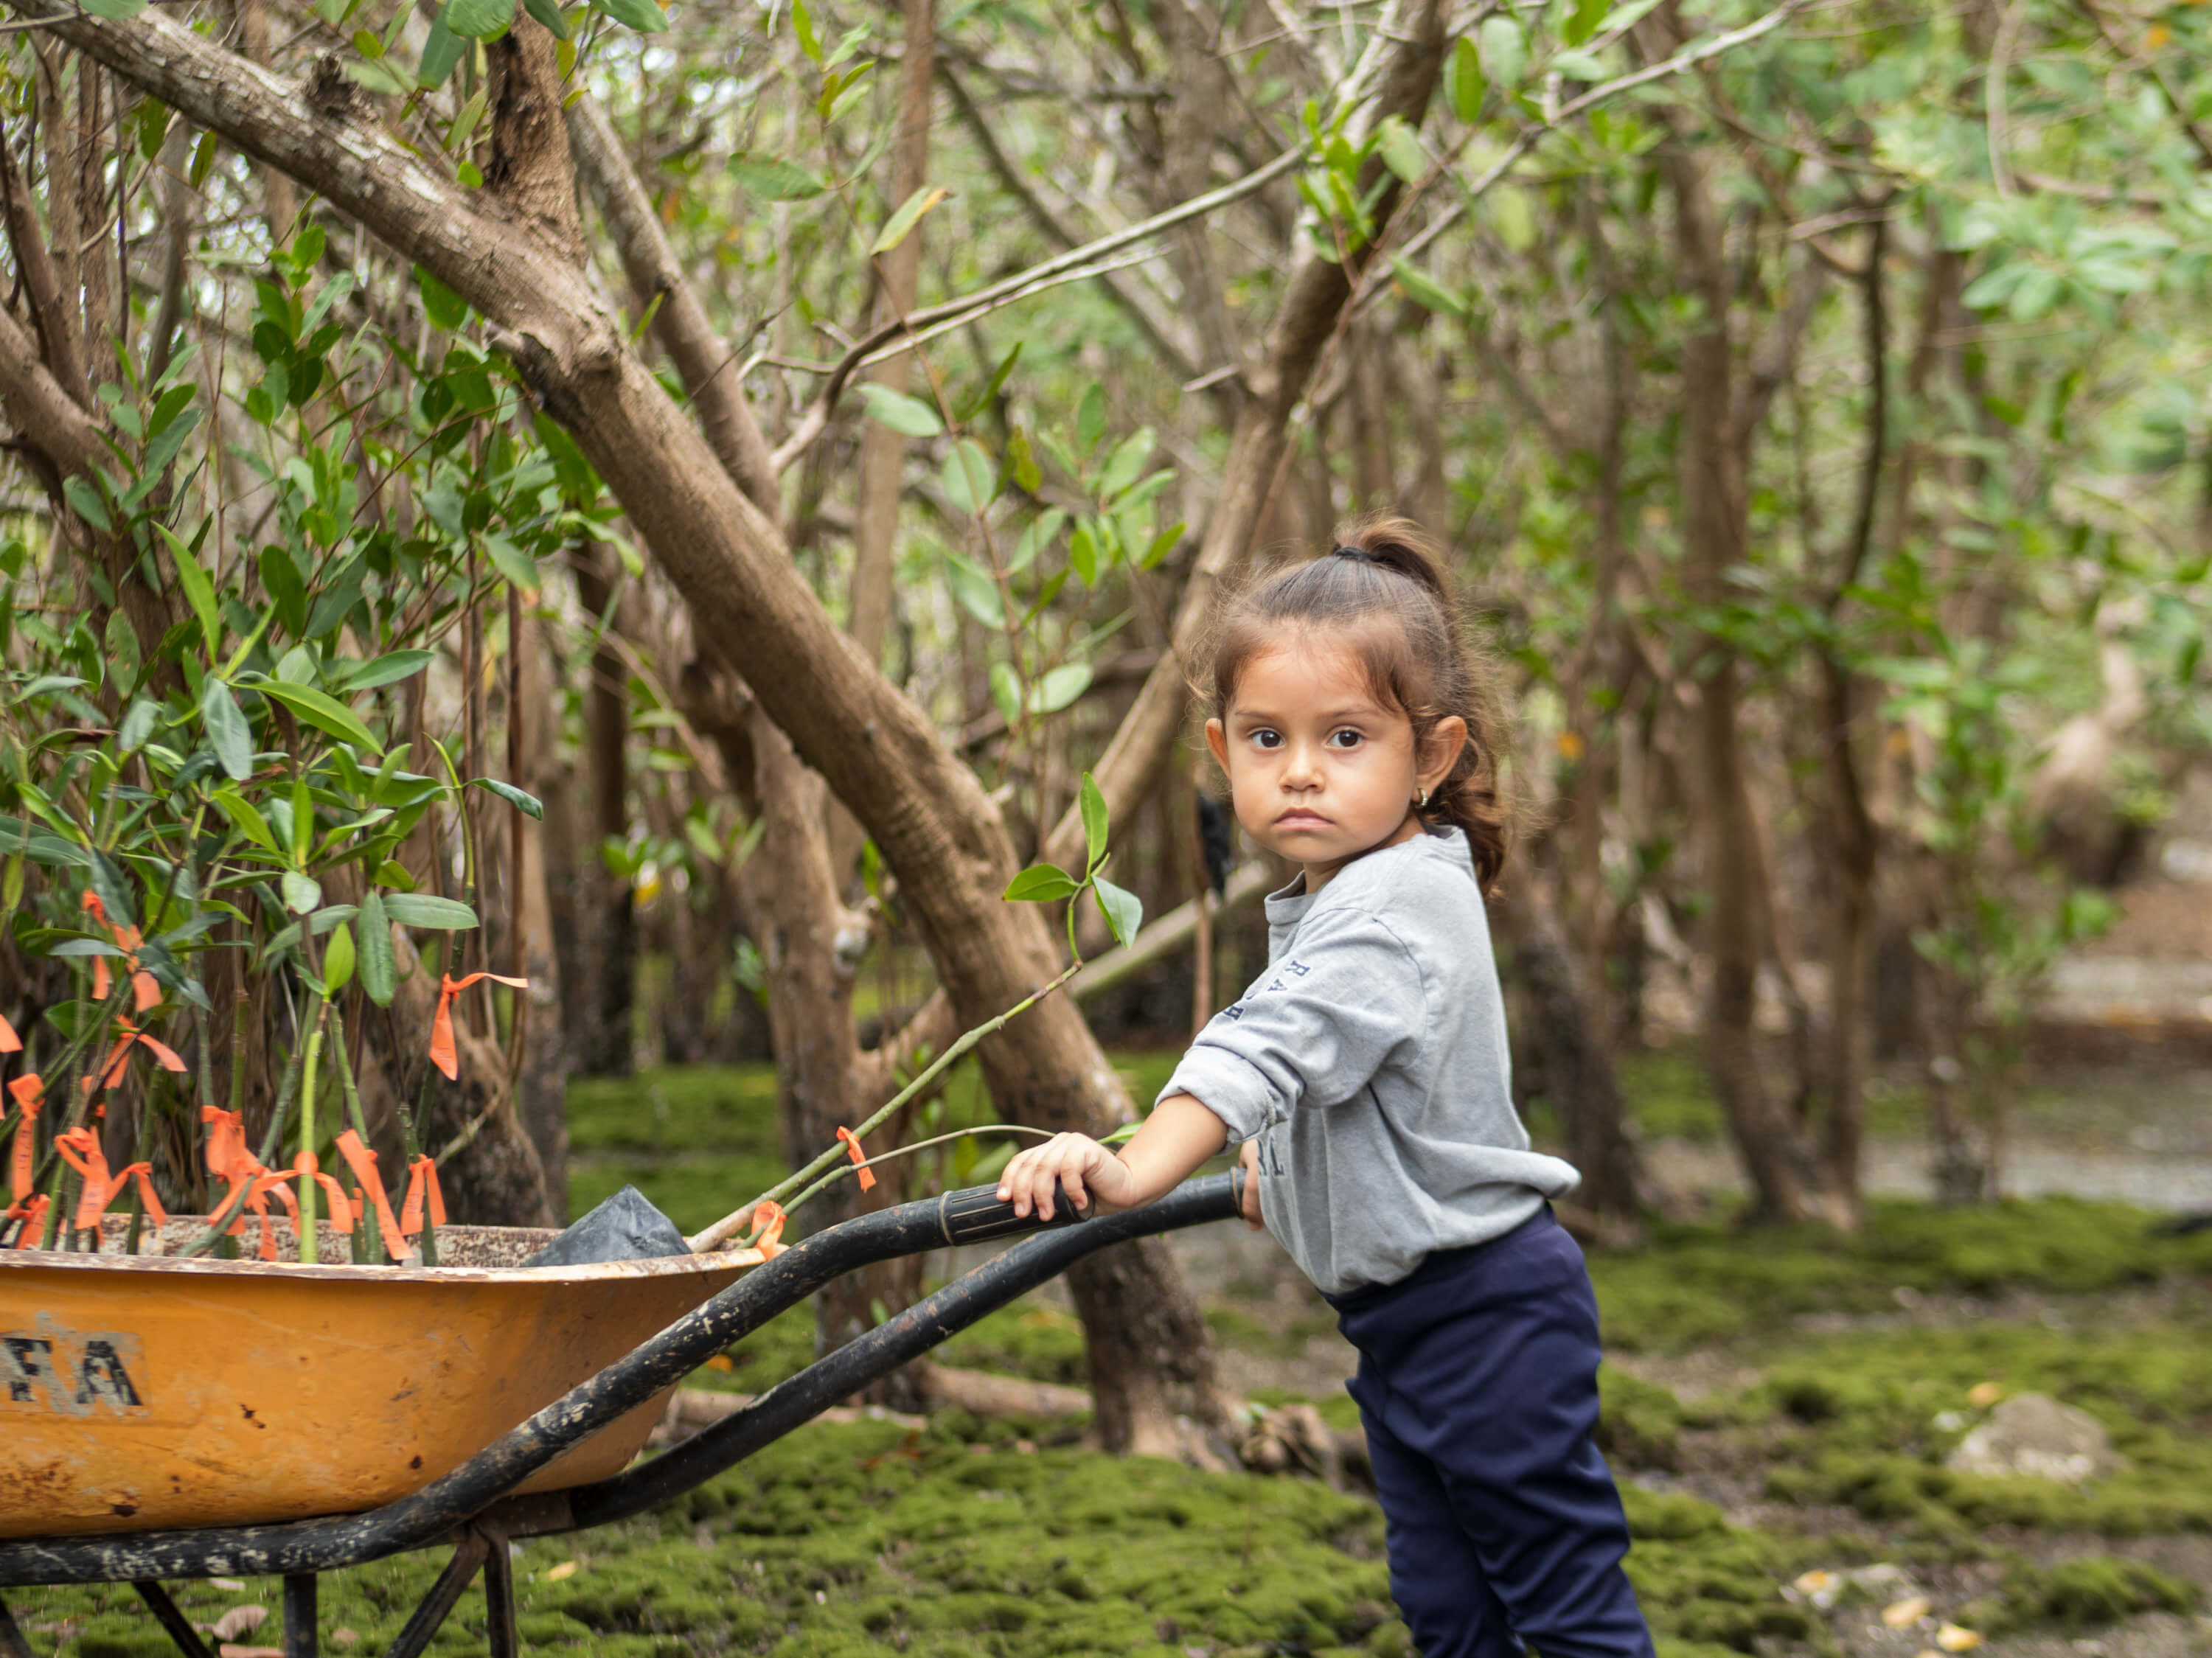 Planting mangroves in Costa Rica